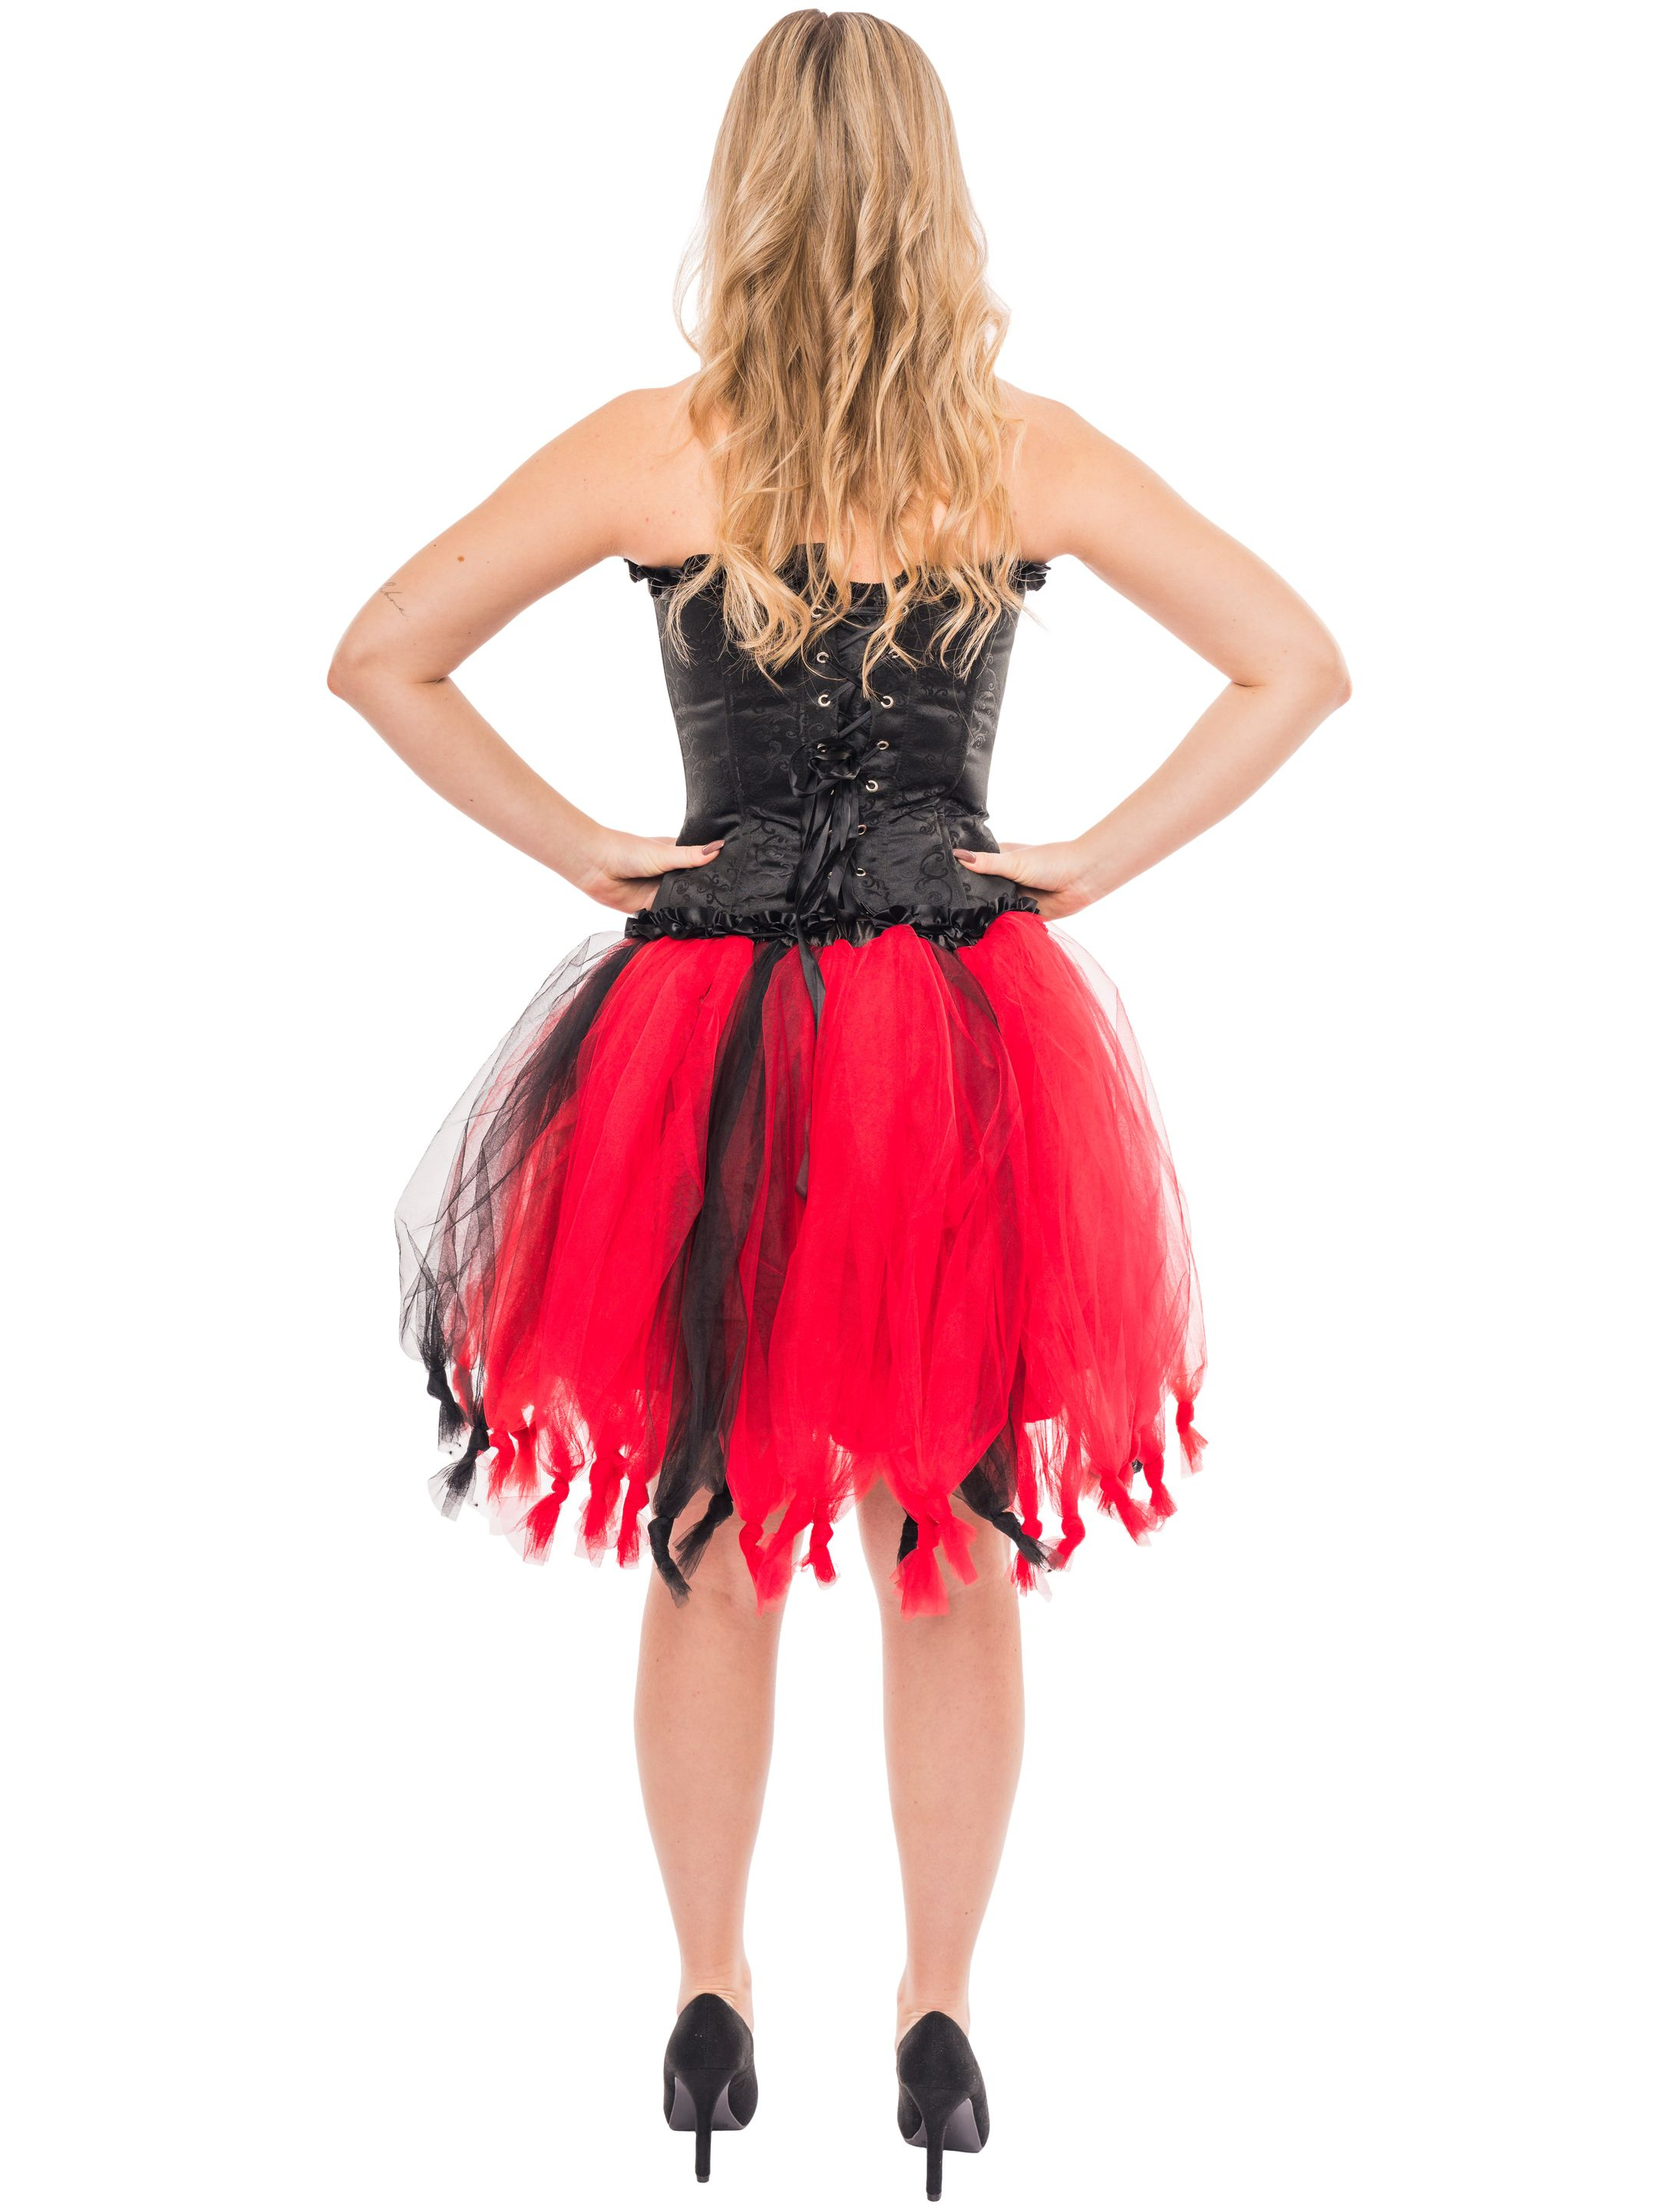 Petticoat de luxe rot/schwarz one size